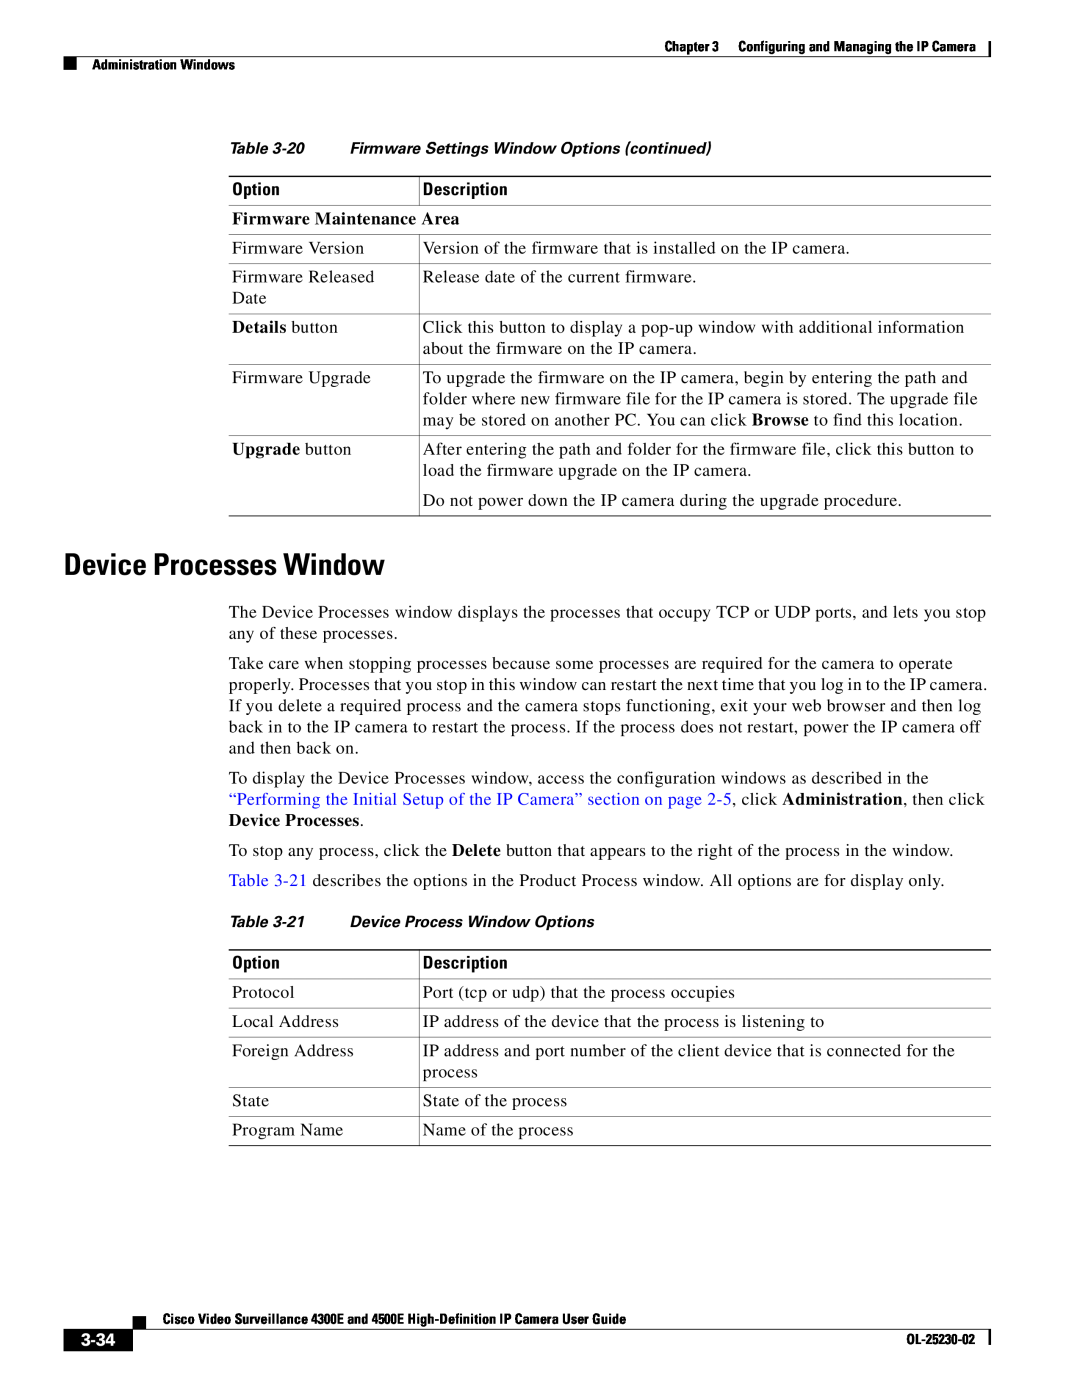 Cisco Systems 4300E manual Device Processes Window, Firmware Maintenance Area, Details button, Upgrade button, 3-34 